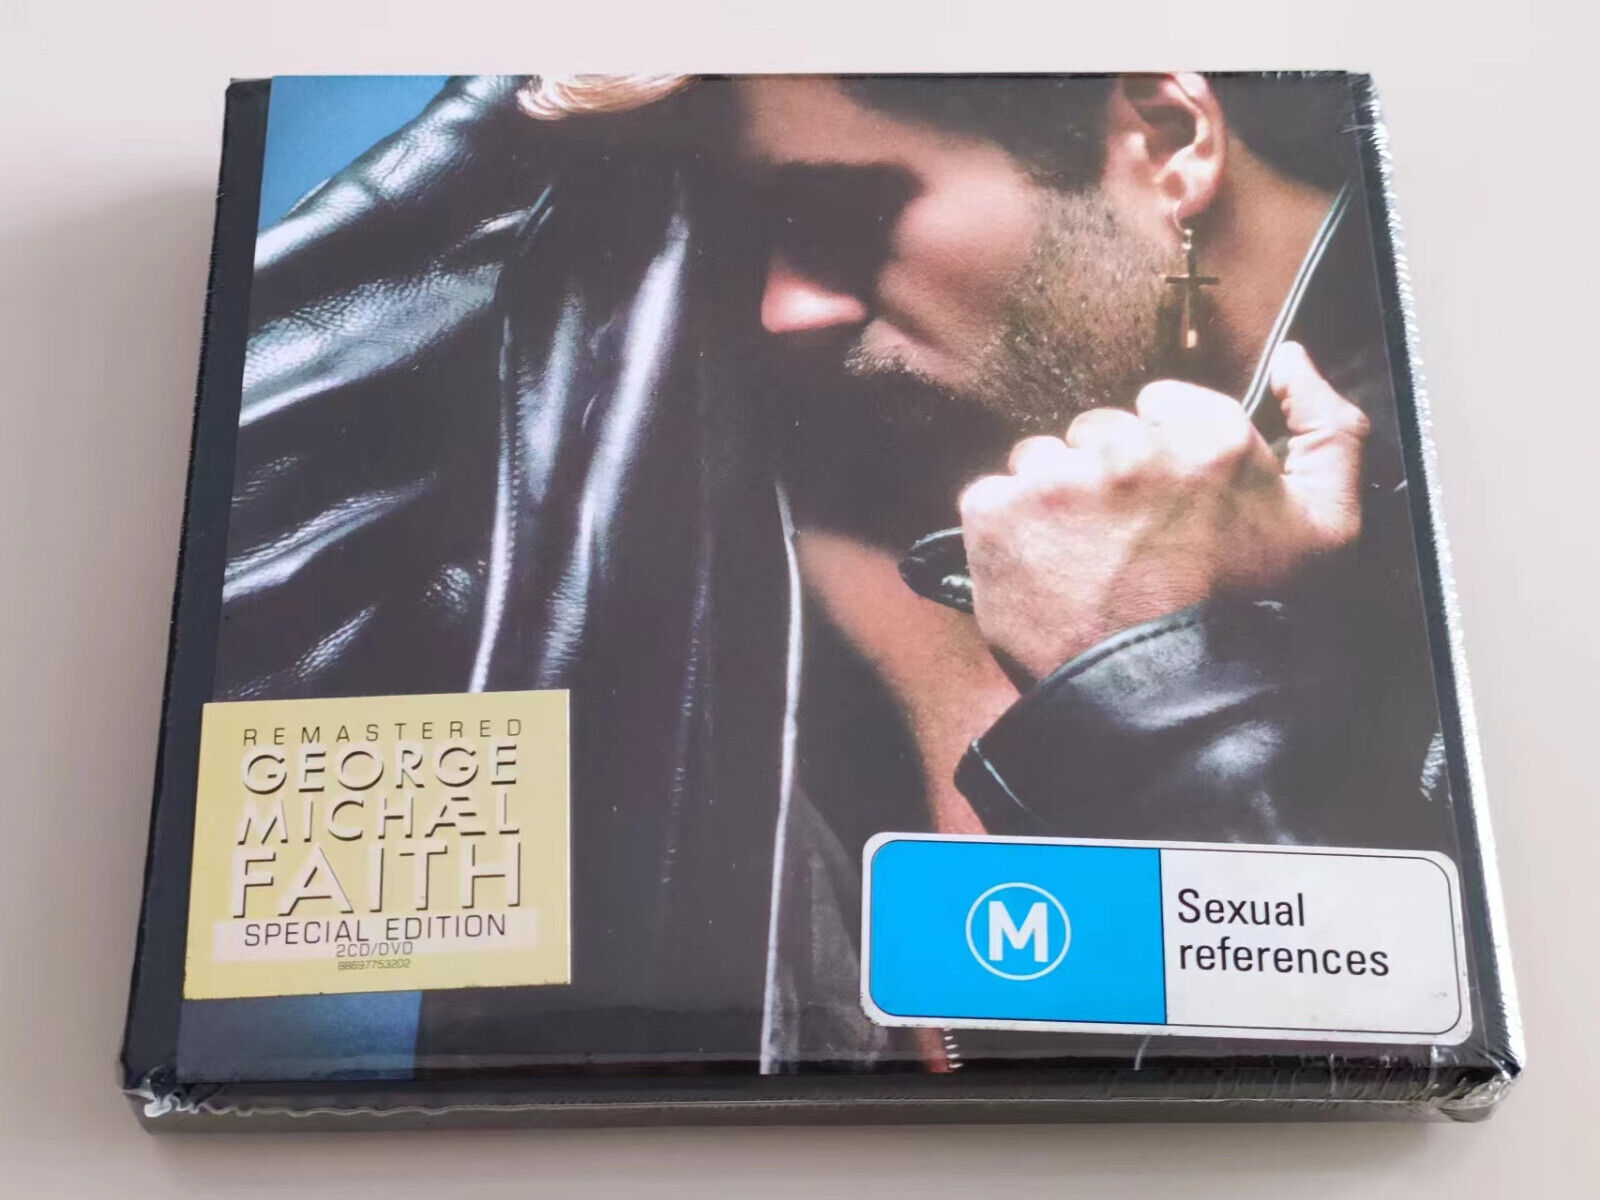 Faith [2CD/DVD] [Box] by George Michael (CD, Jan-2011, 3 Discs, Epic)